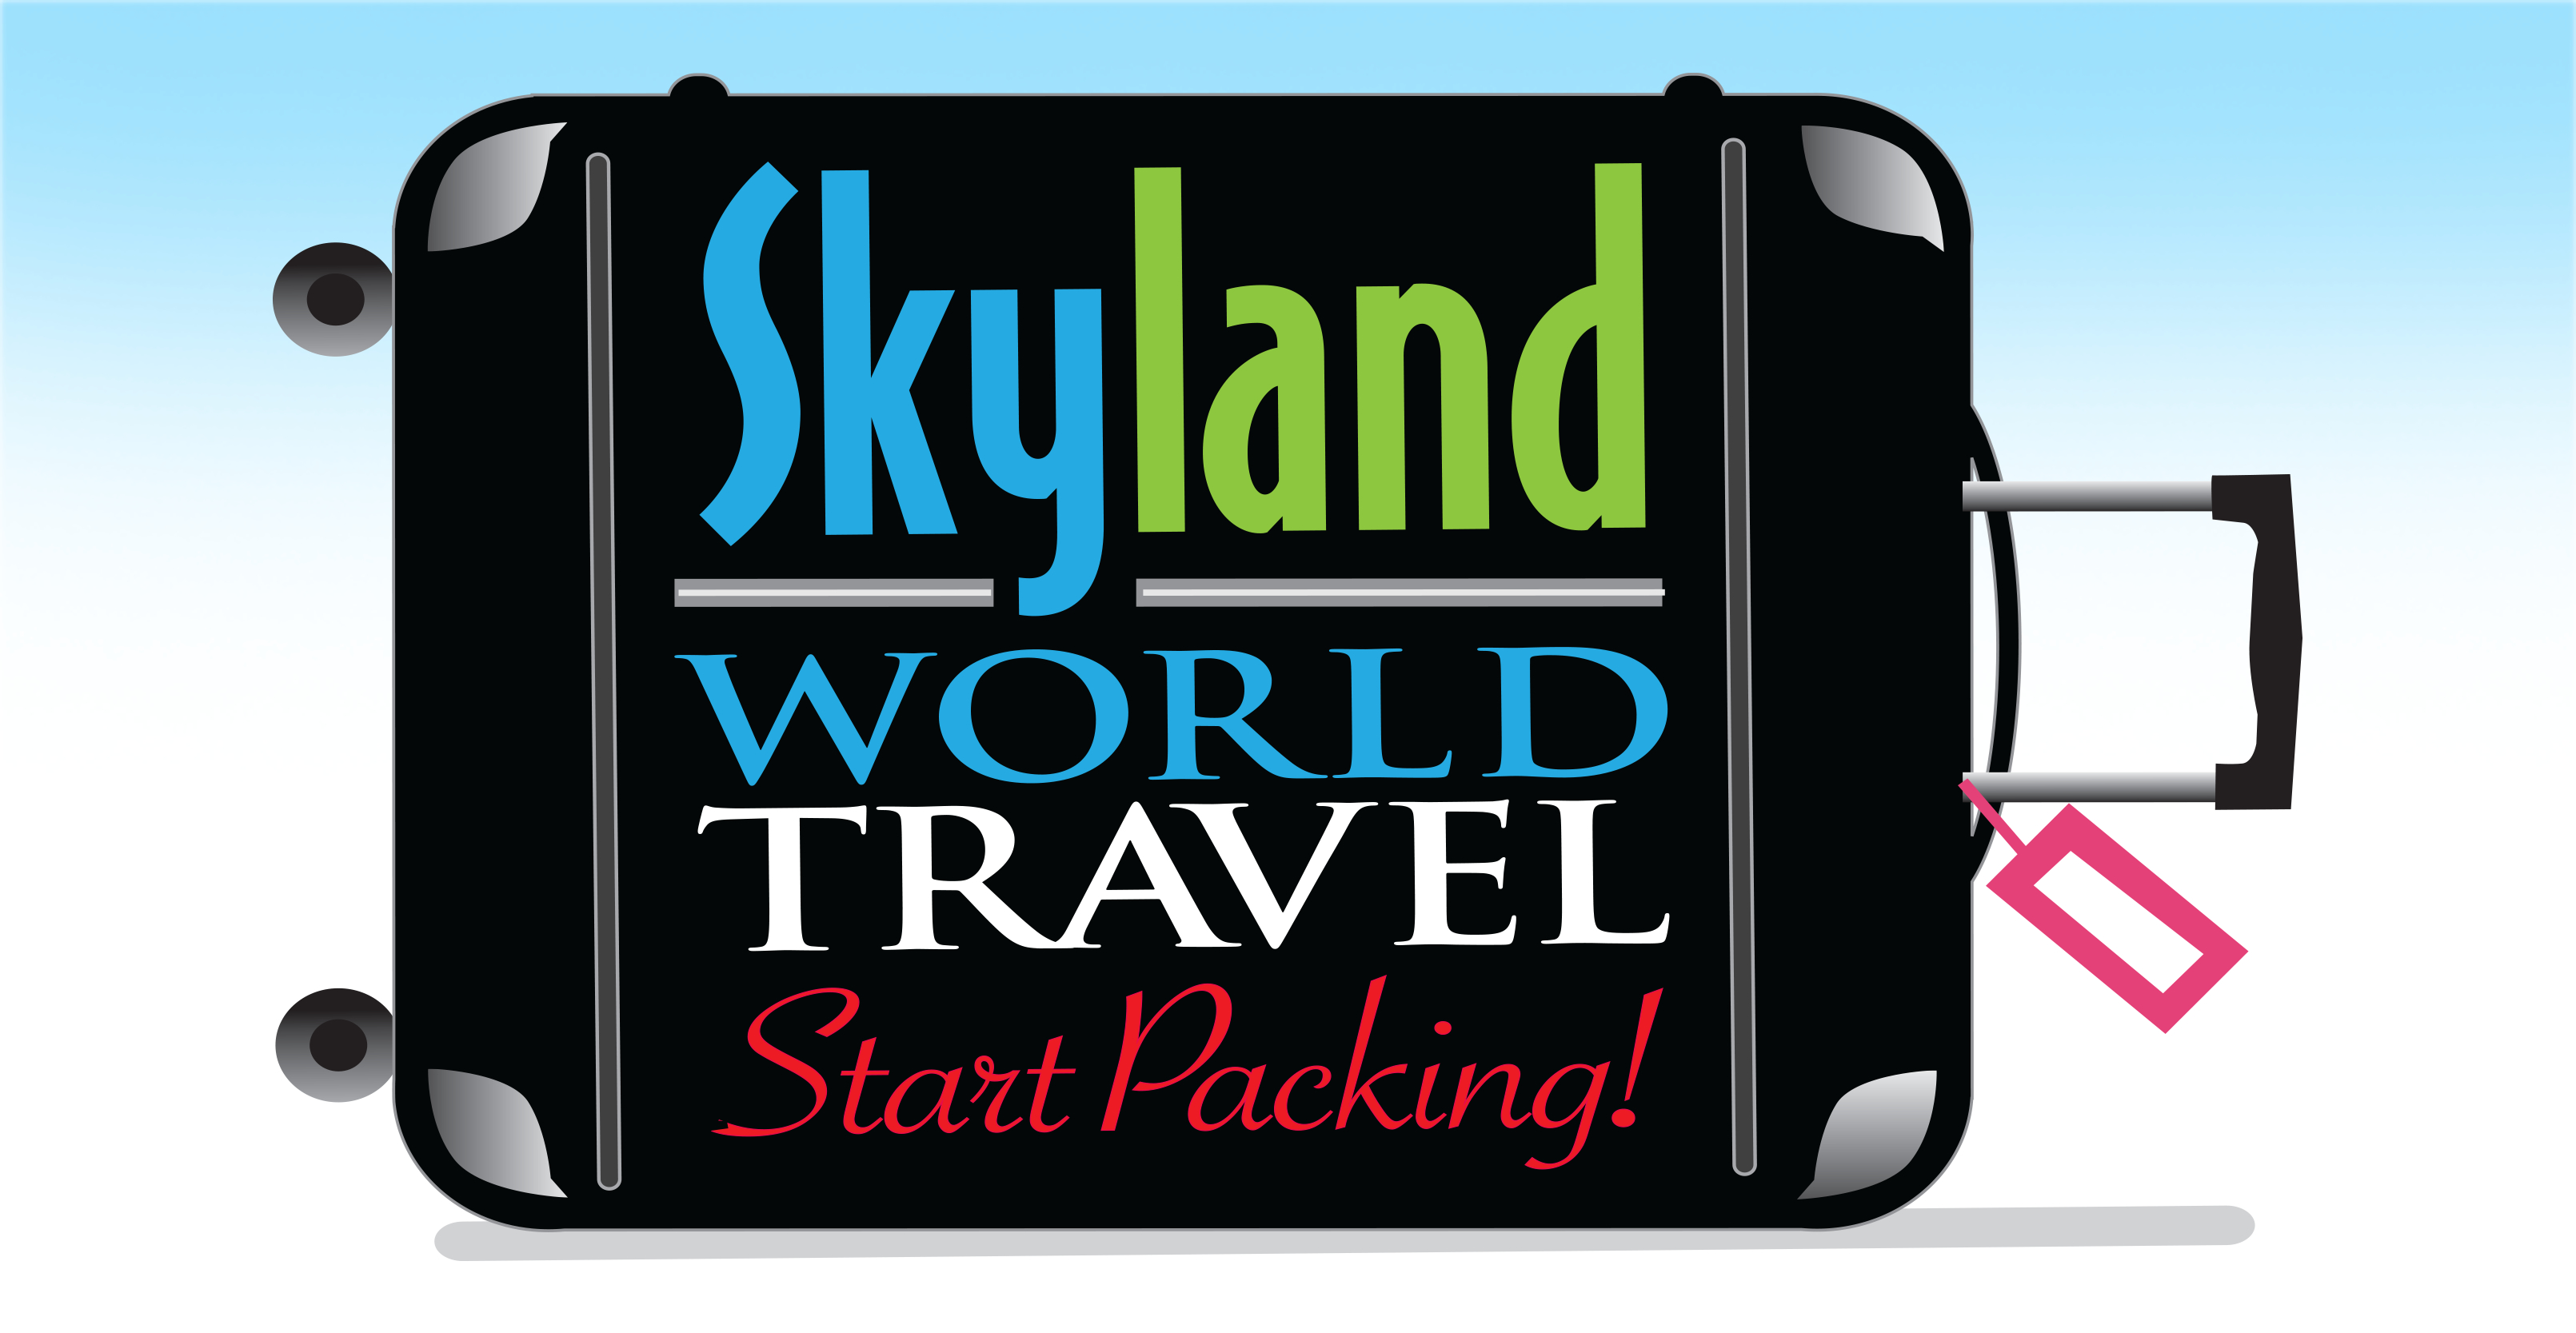 Skyland World Travel | Crystal Cruises - Hackettstown, NJ